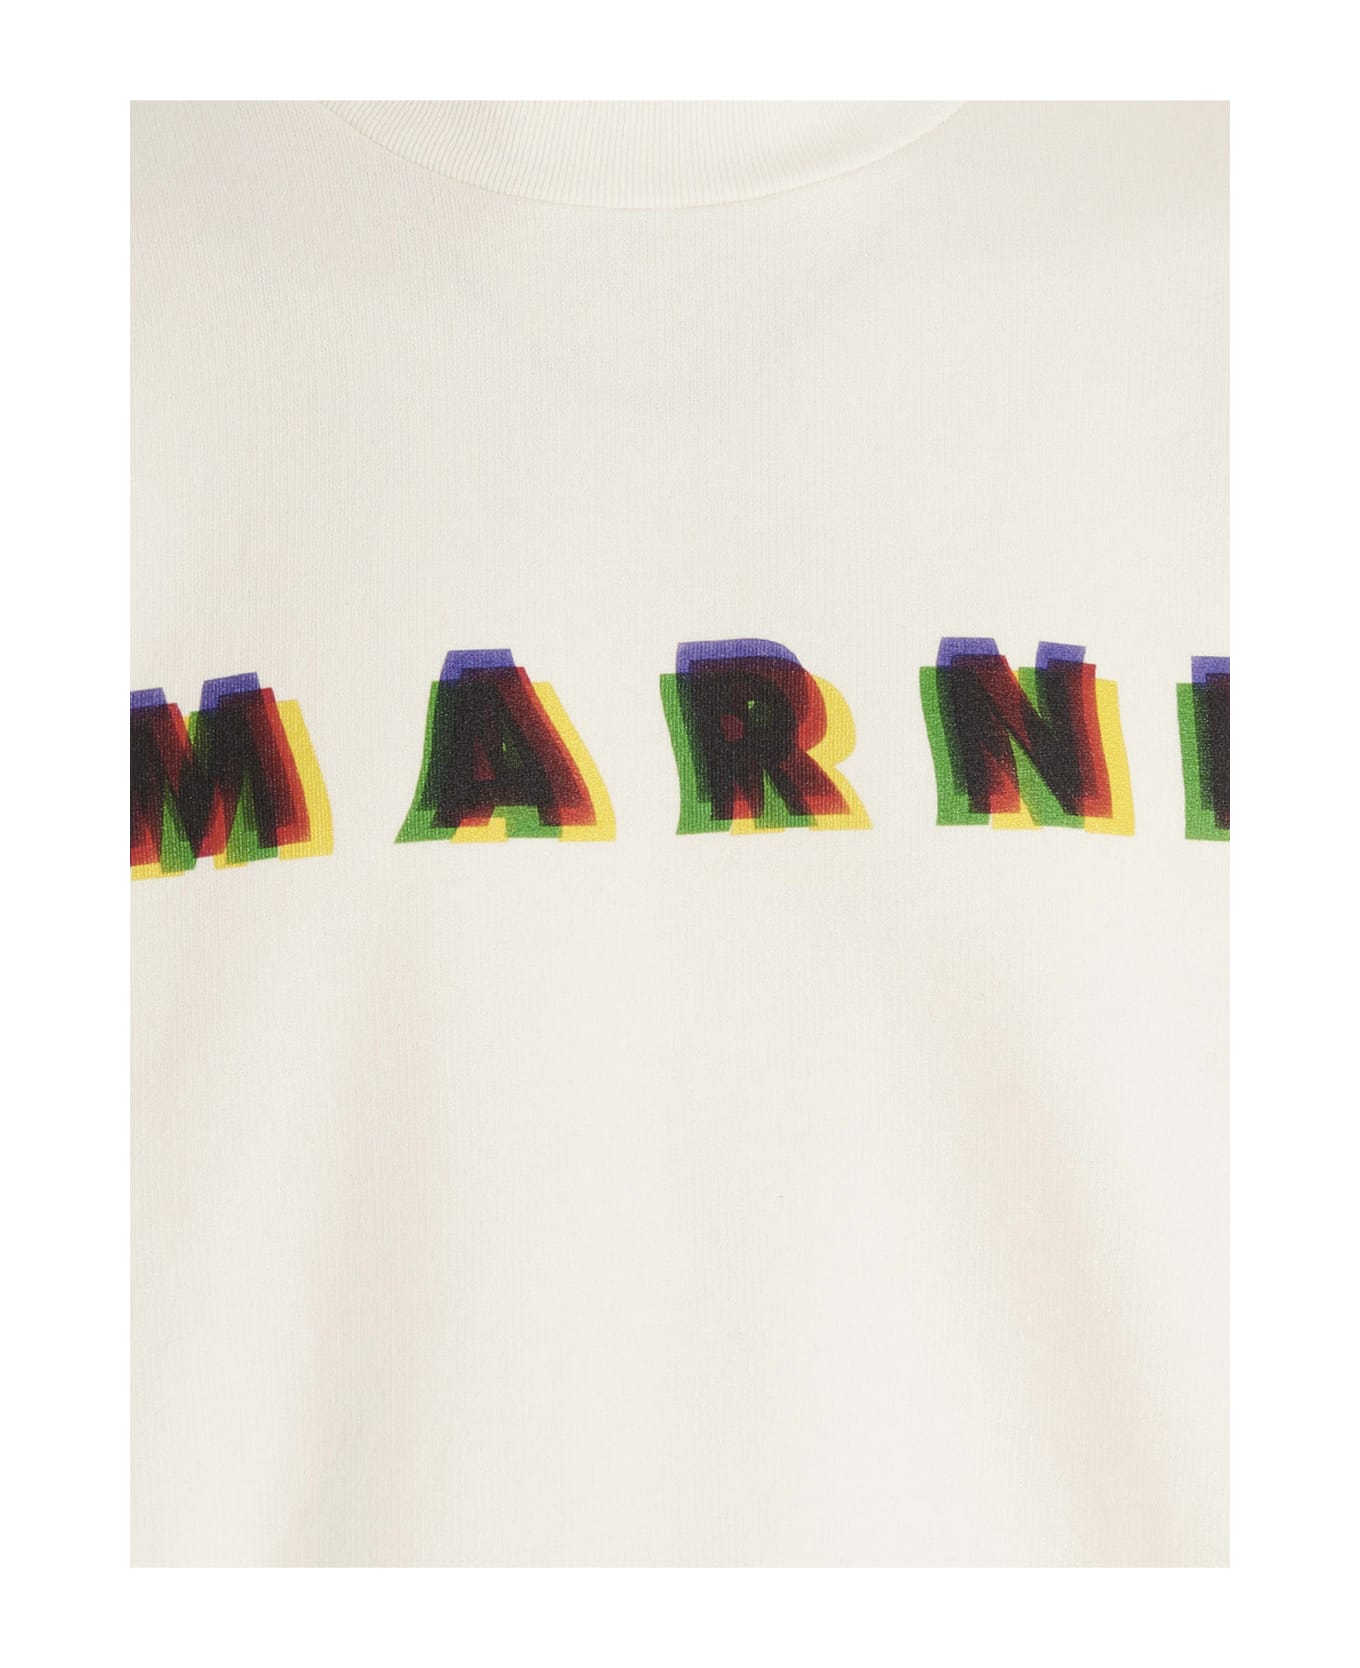 Marni Logo Sweatshirt